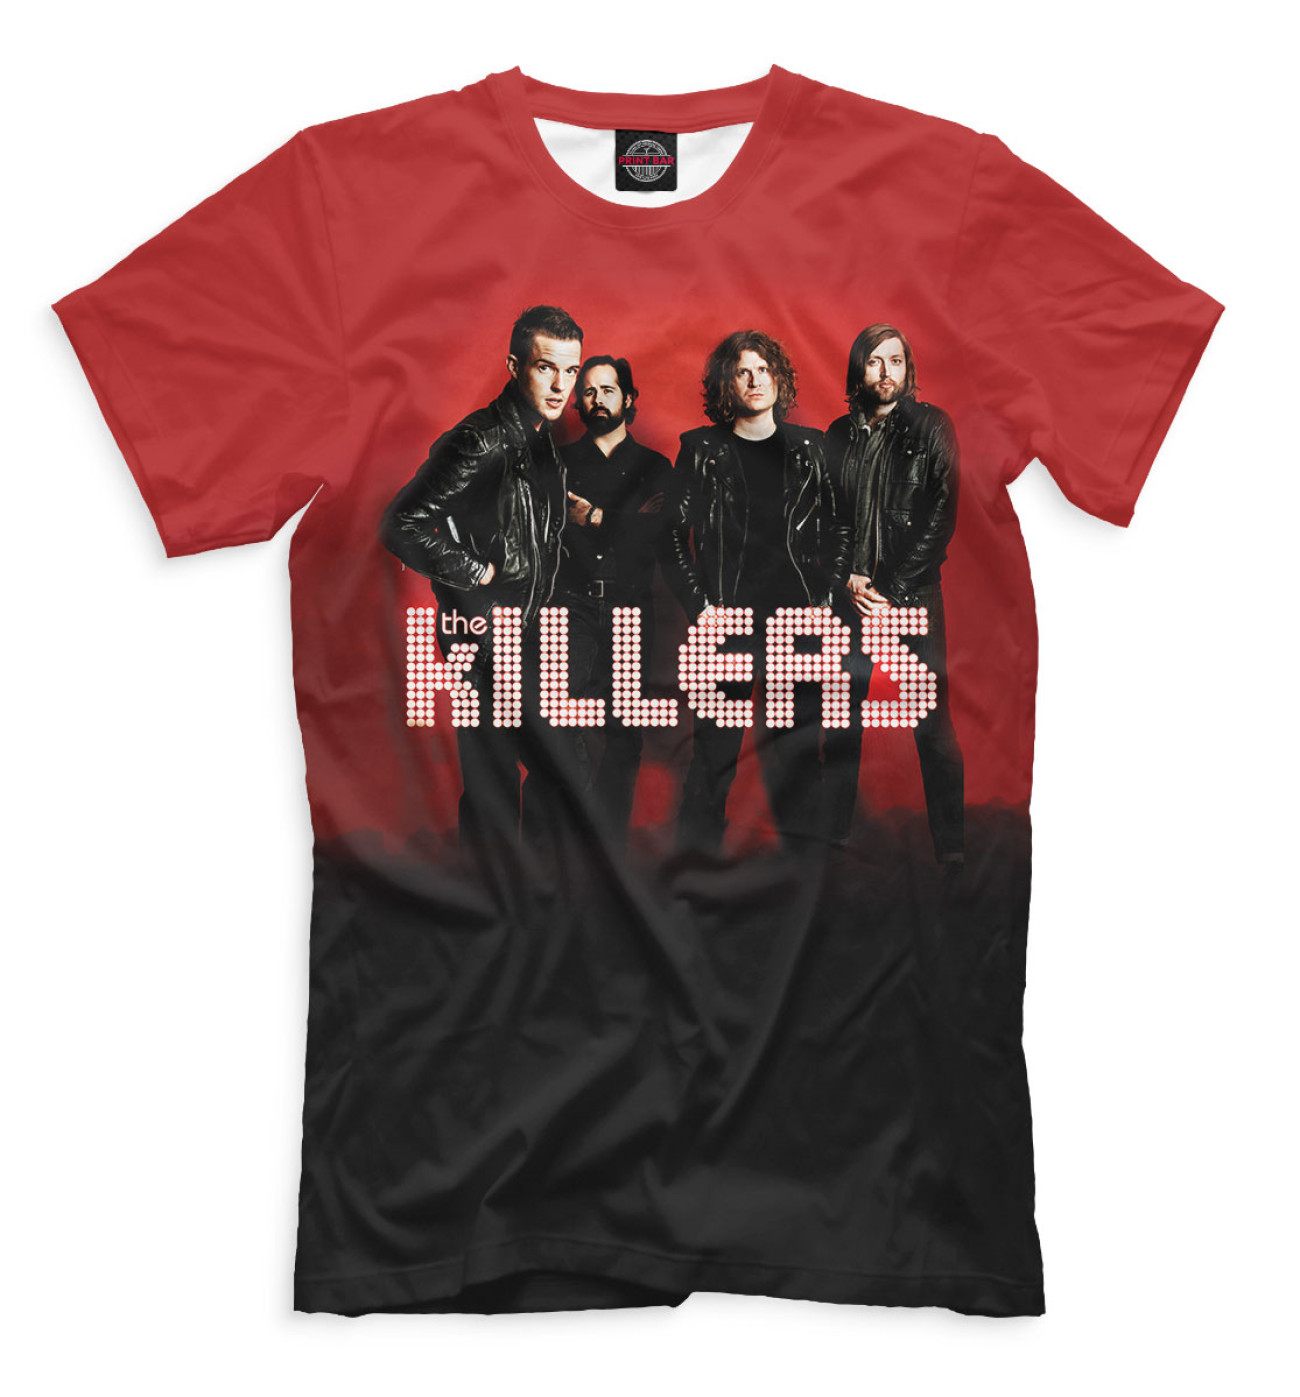 Мужская Футболка The Killers, артикул: KLR-287975-fut-2